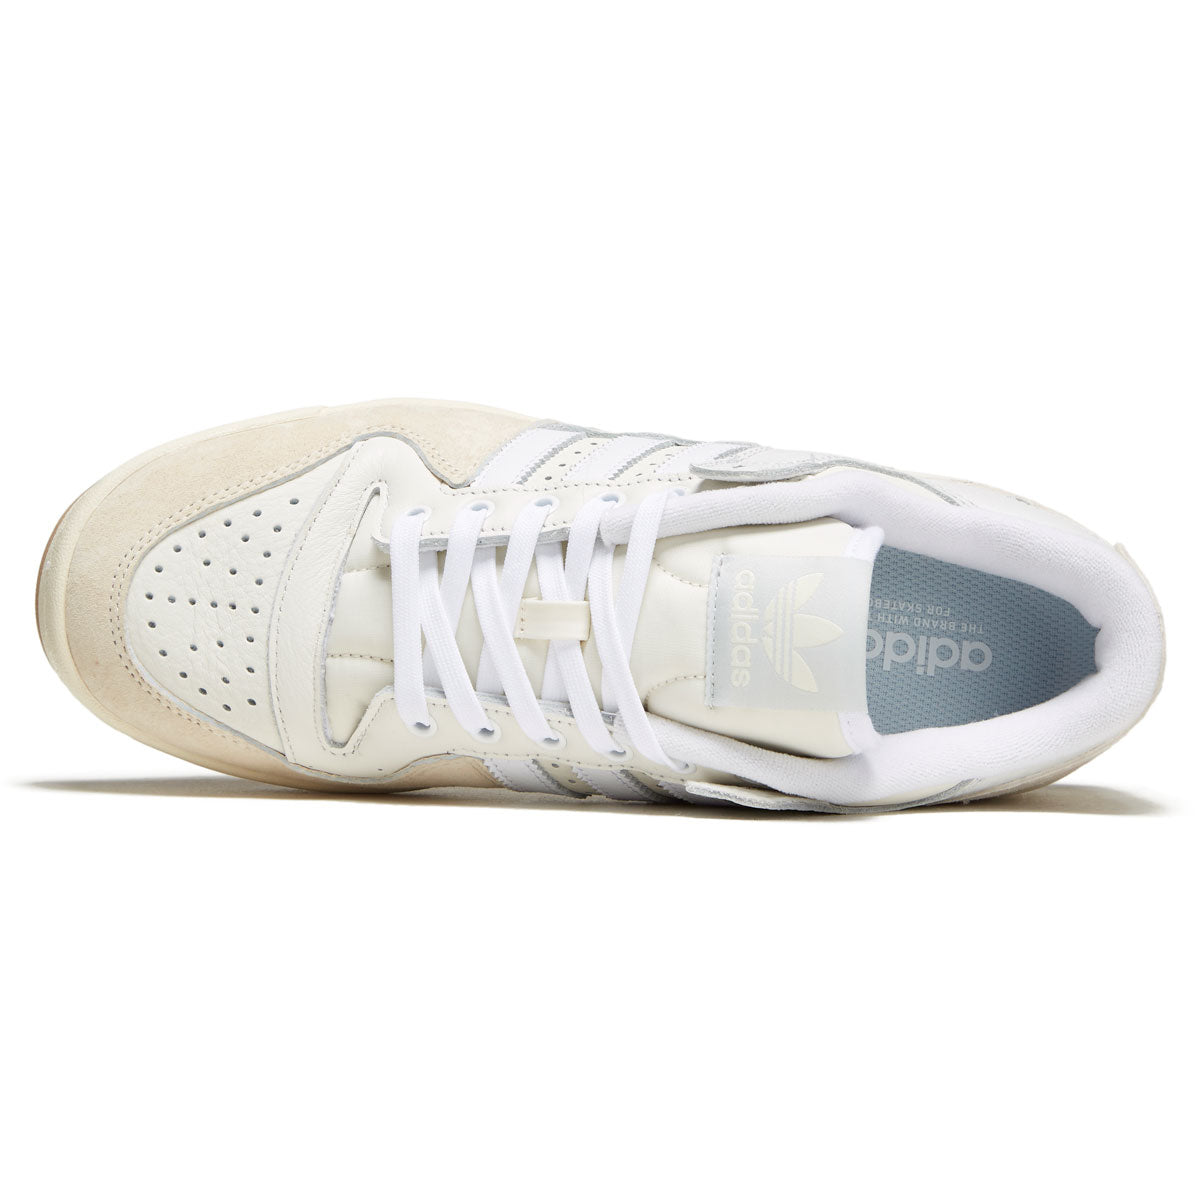 Adidas Forum 84 Low Adv Shoes - Chalk White/White/Cloud White image 3